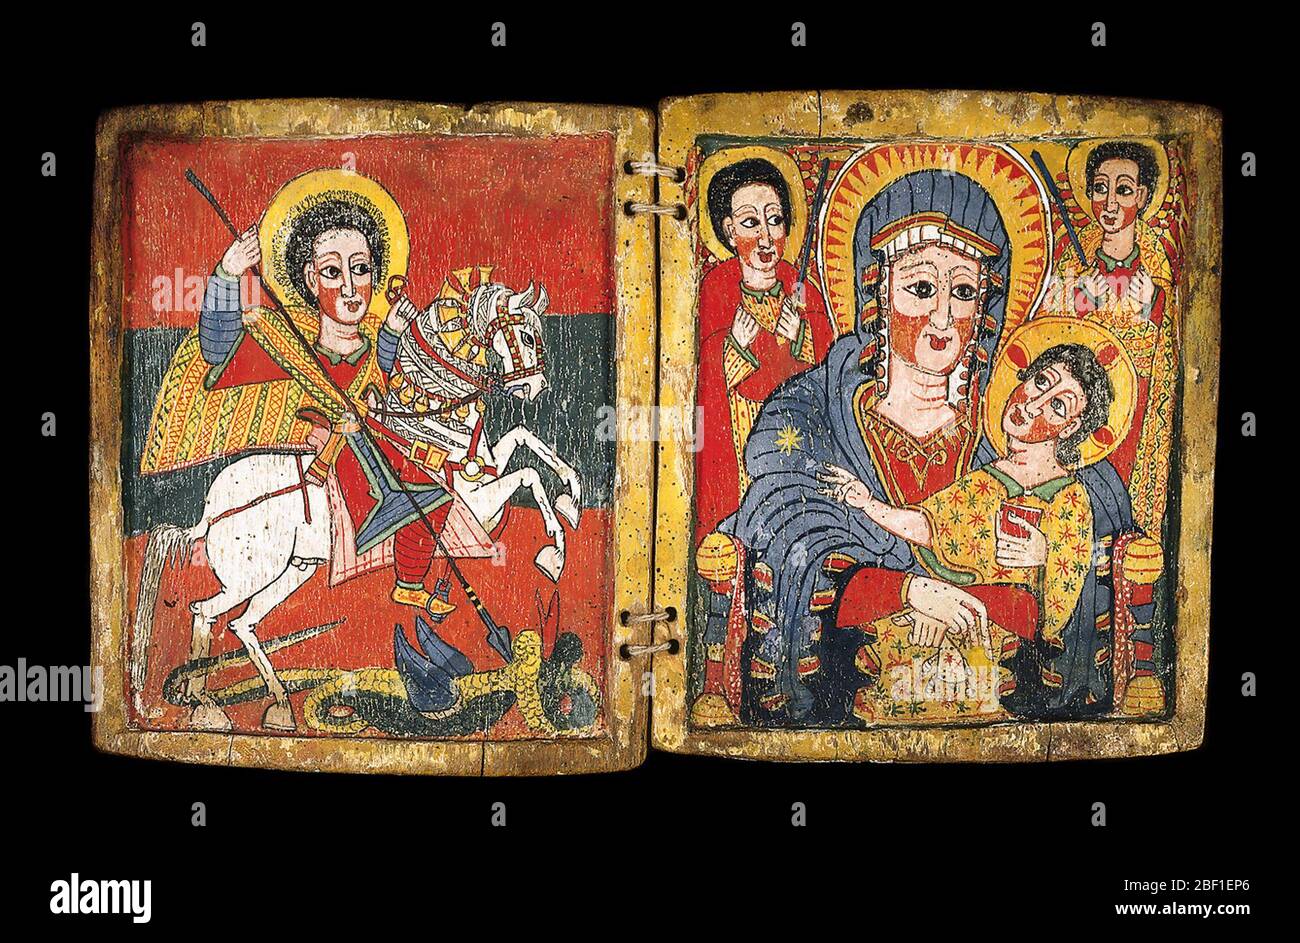 Ethiopian Orthodox; Ethiopia; Late 17th century; Distemper and gesso on wood; H x W x D: 19.8 x 33.6 x 2.1 cm (7 13/16 x 13 1/4 x 13/16 in.) Stock Photo